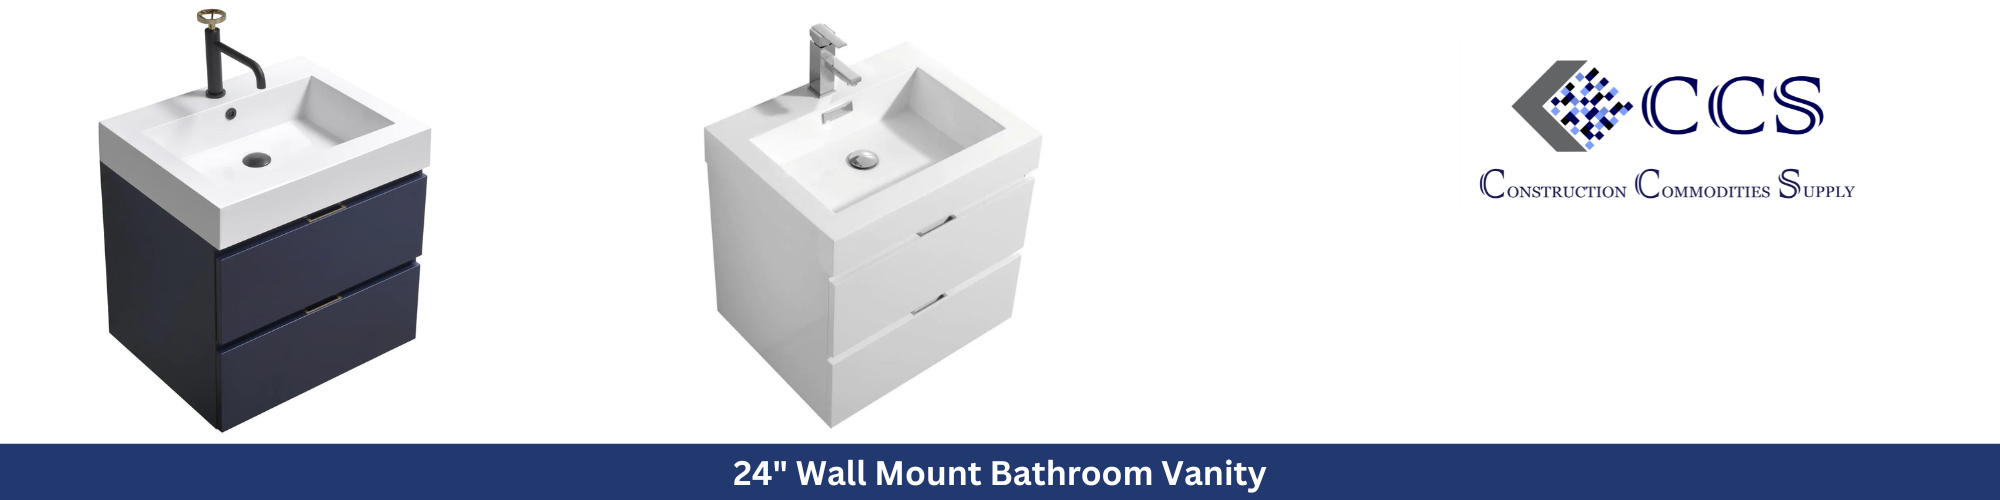 24" Wall Mount Bathroom Vanity